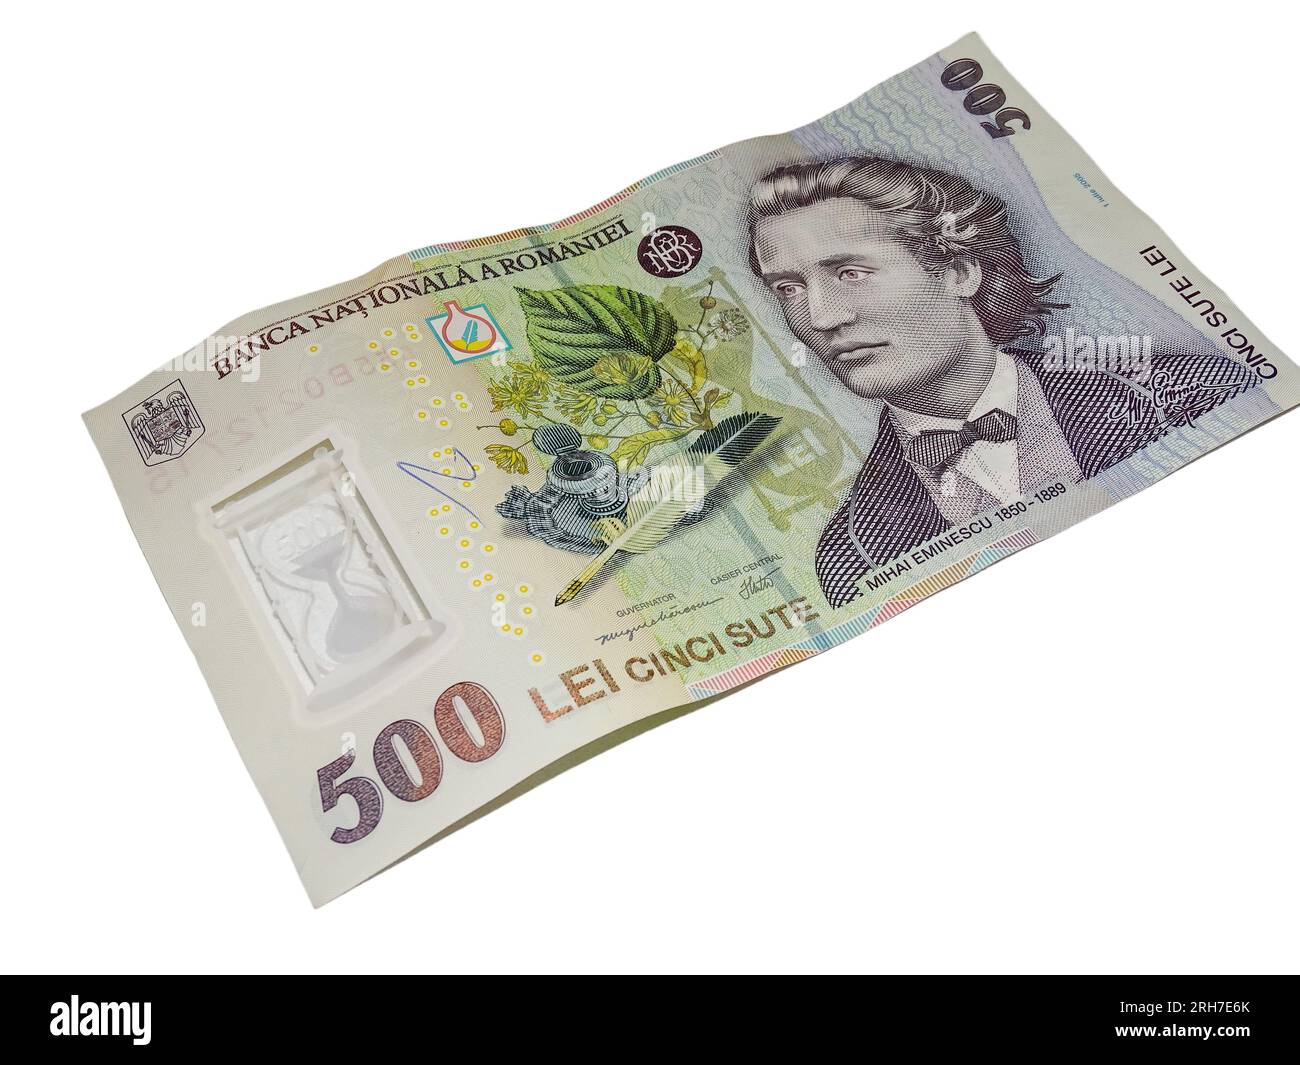 Banknote of 500 lei. Romanian money. Money from Romania Stock Photo